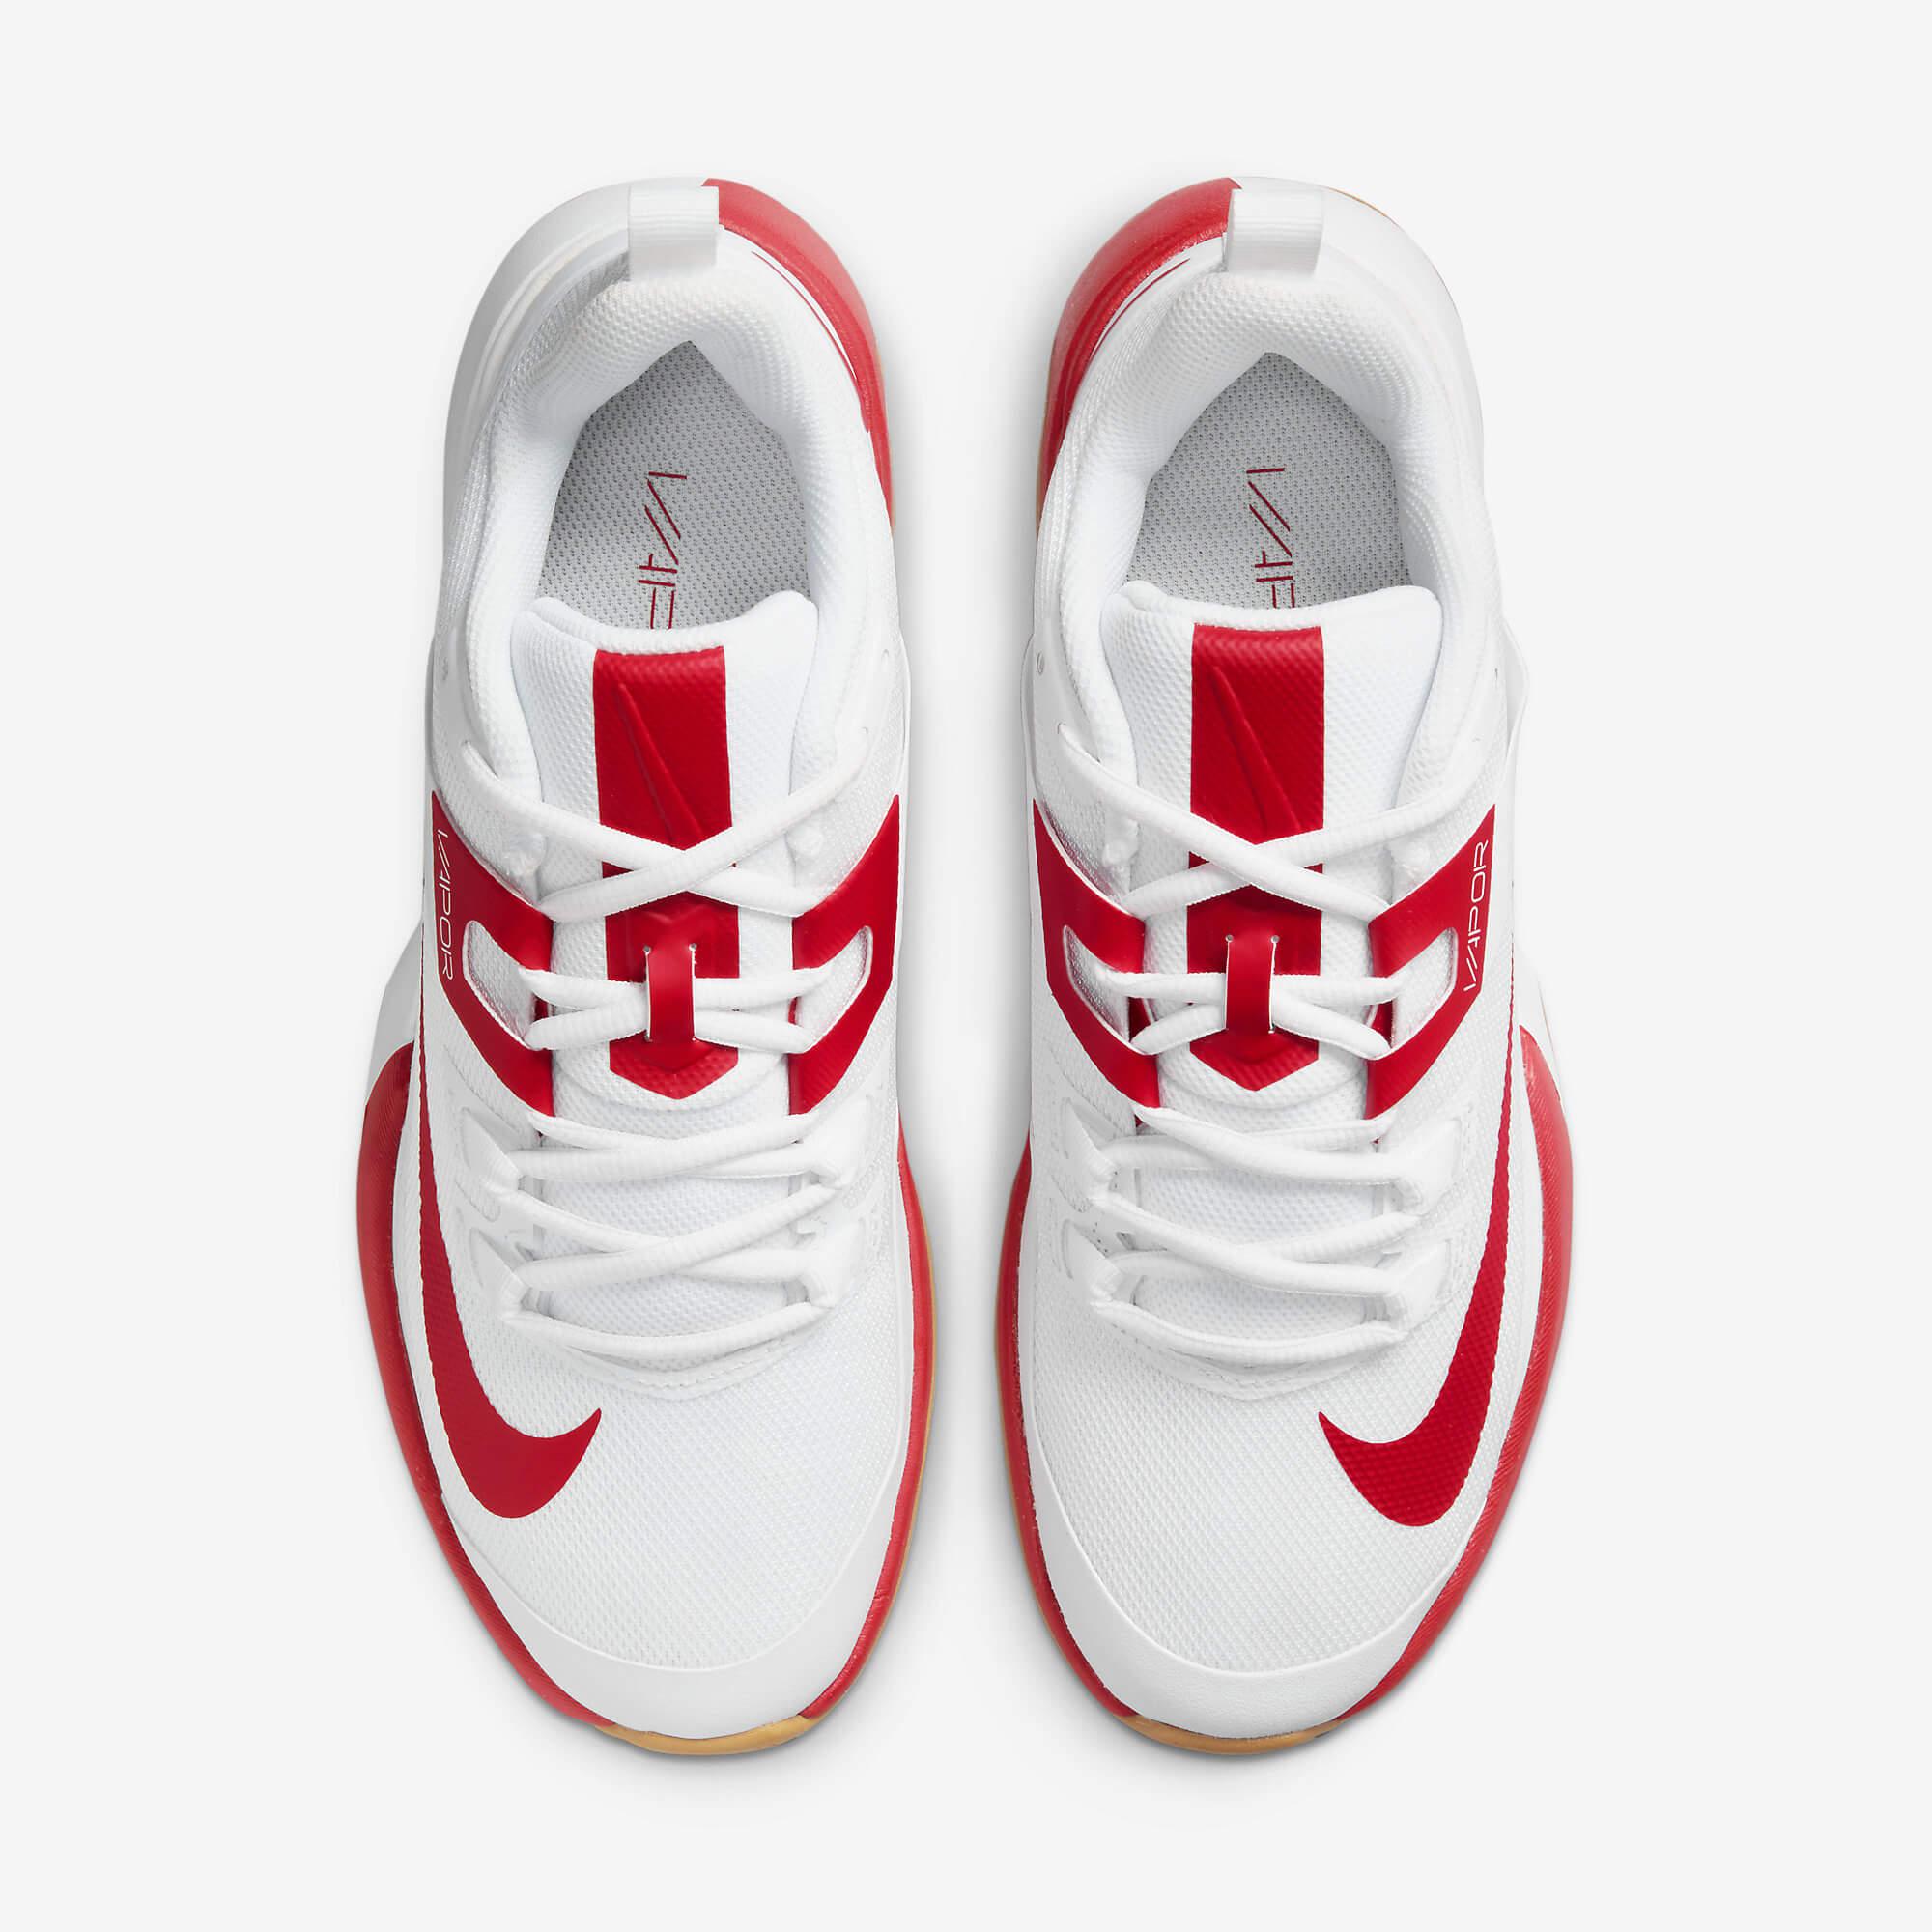 Nike Womens Vapor Lite Tennis Shoes - White/University Red - Tennisnuts.com